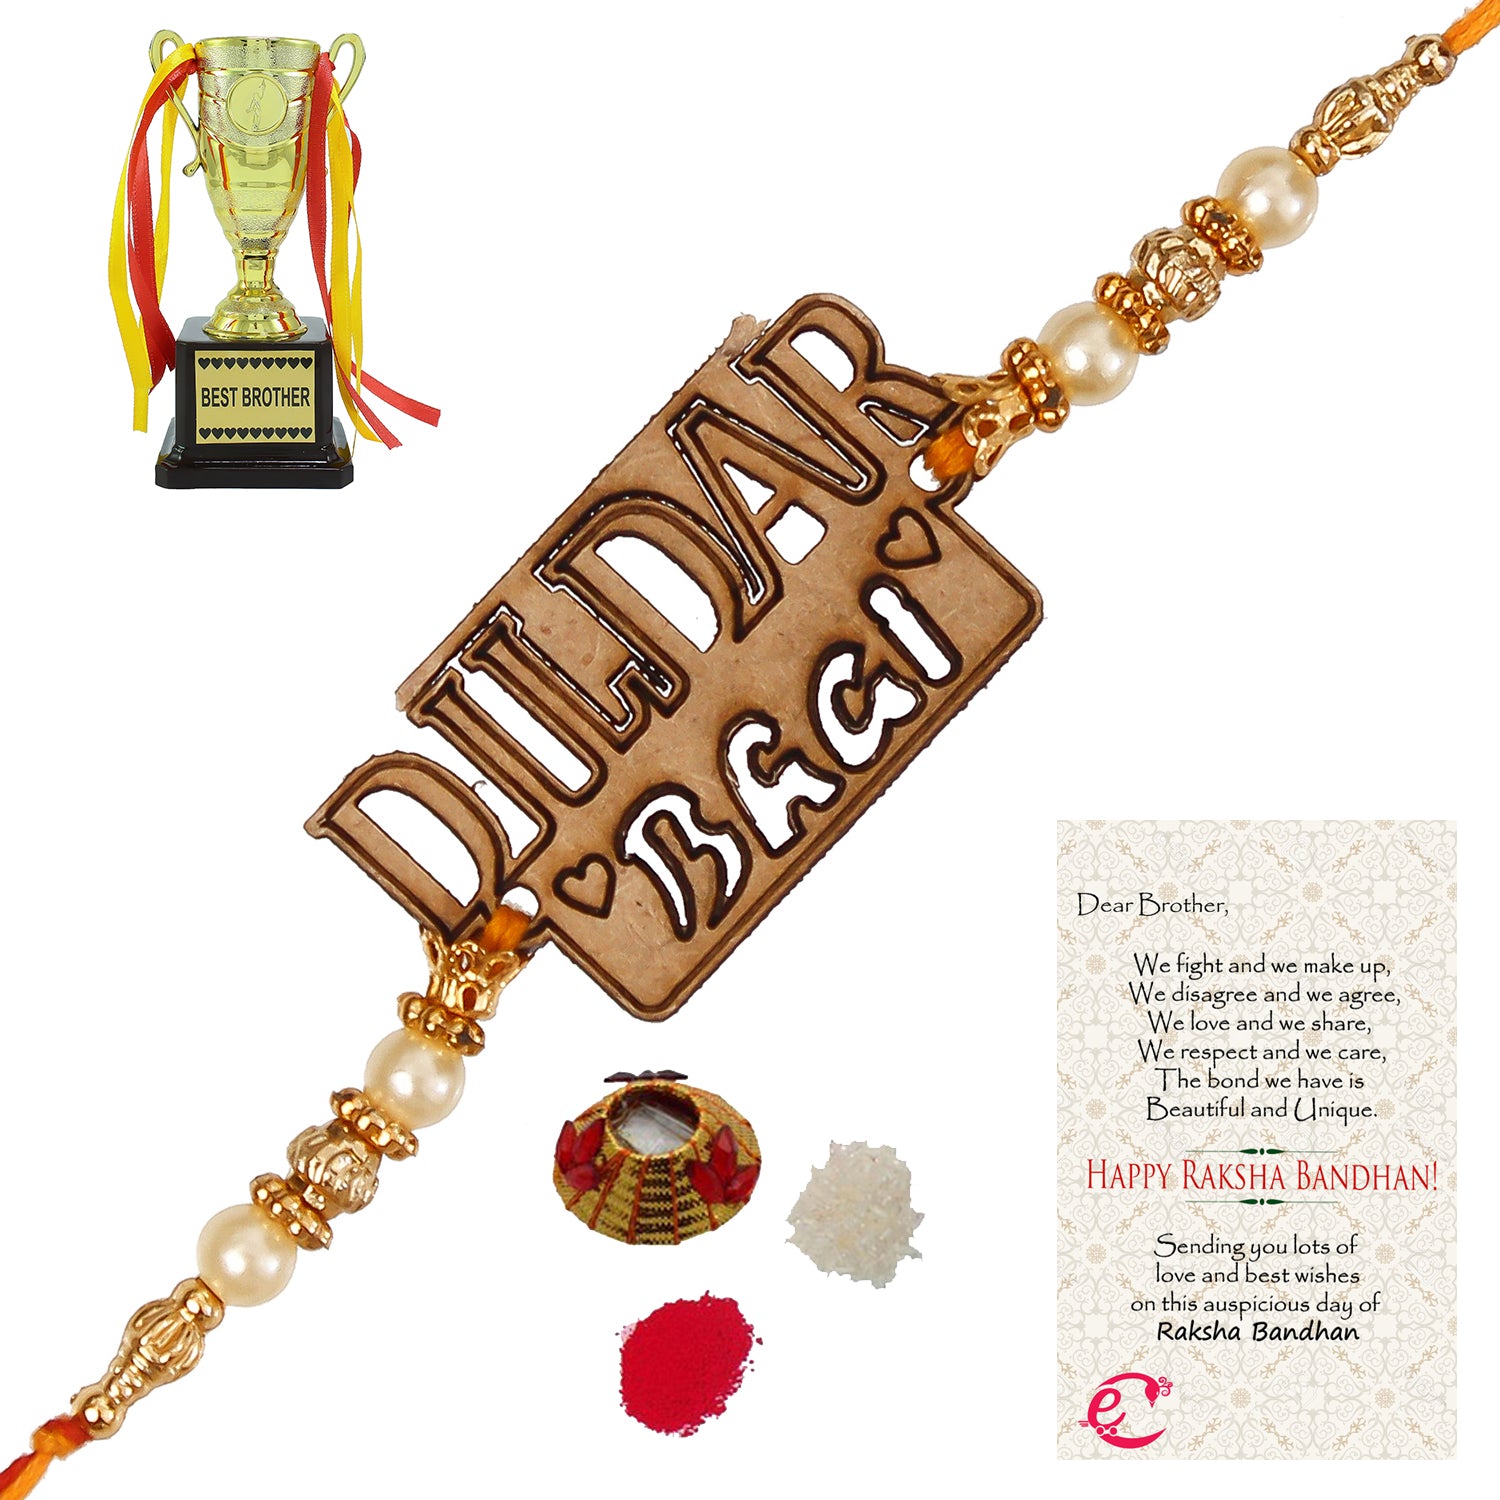 Designer Wooden Dildar Bhai Rakhi with Best Brother Trophy and Roli Tikka Matki, Best Wishes Greeting Card